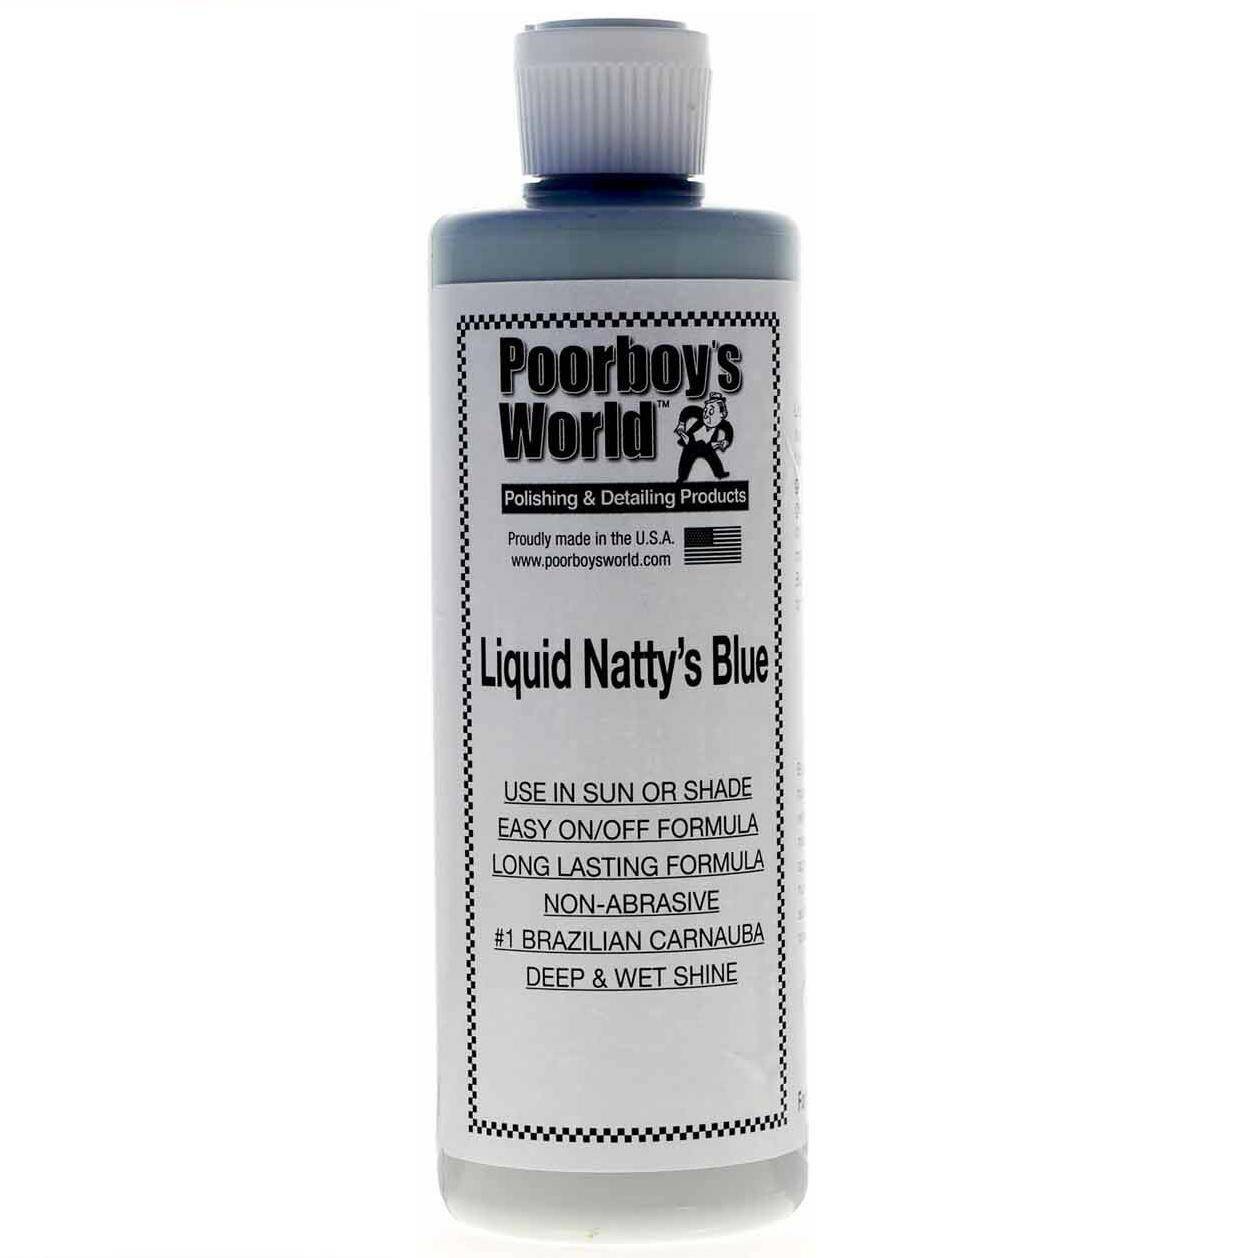 Poorboys World Liquid Natty`s Blue Wax